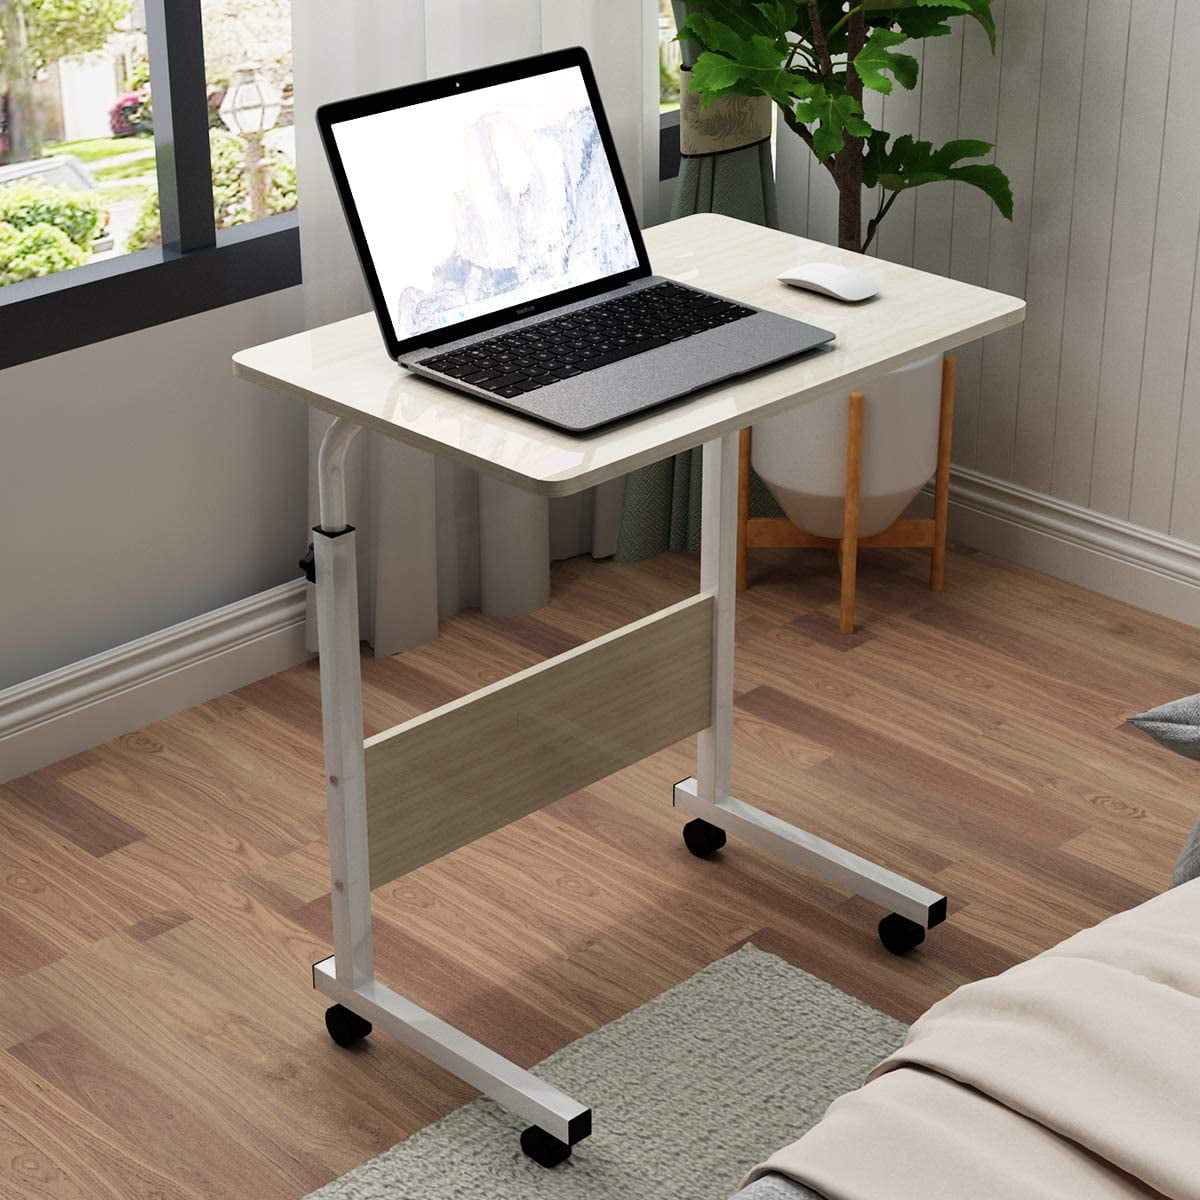 24''x16'' Rolling Laptop Desk Cart Height Adjustable ...